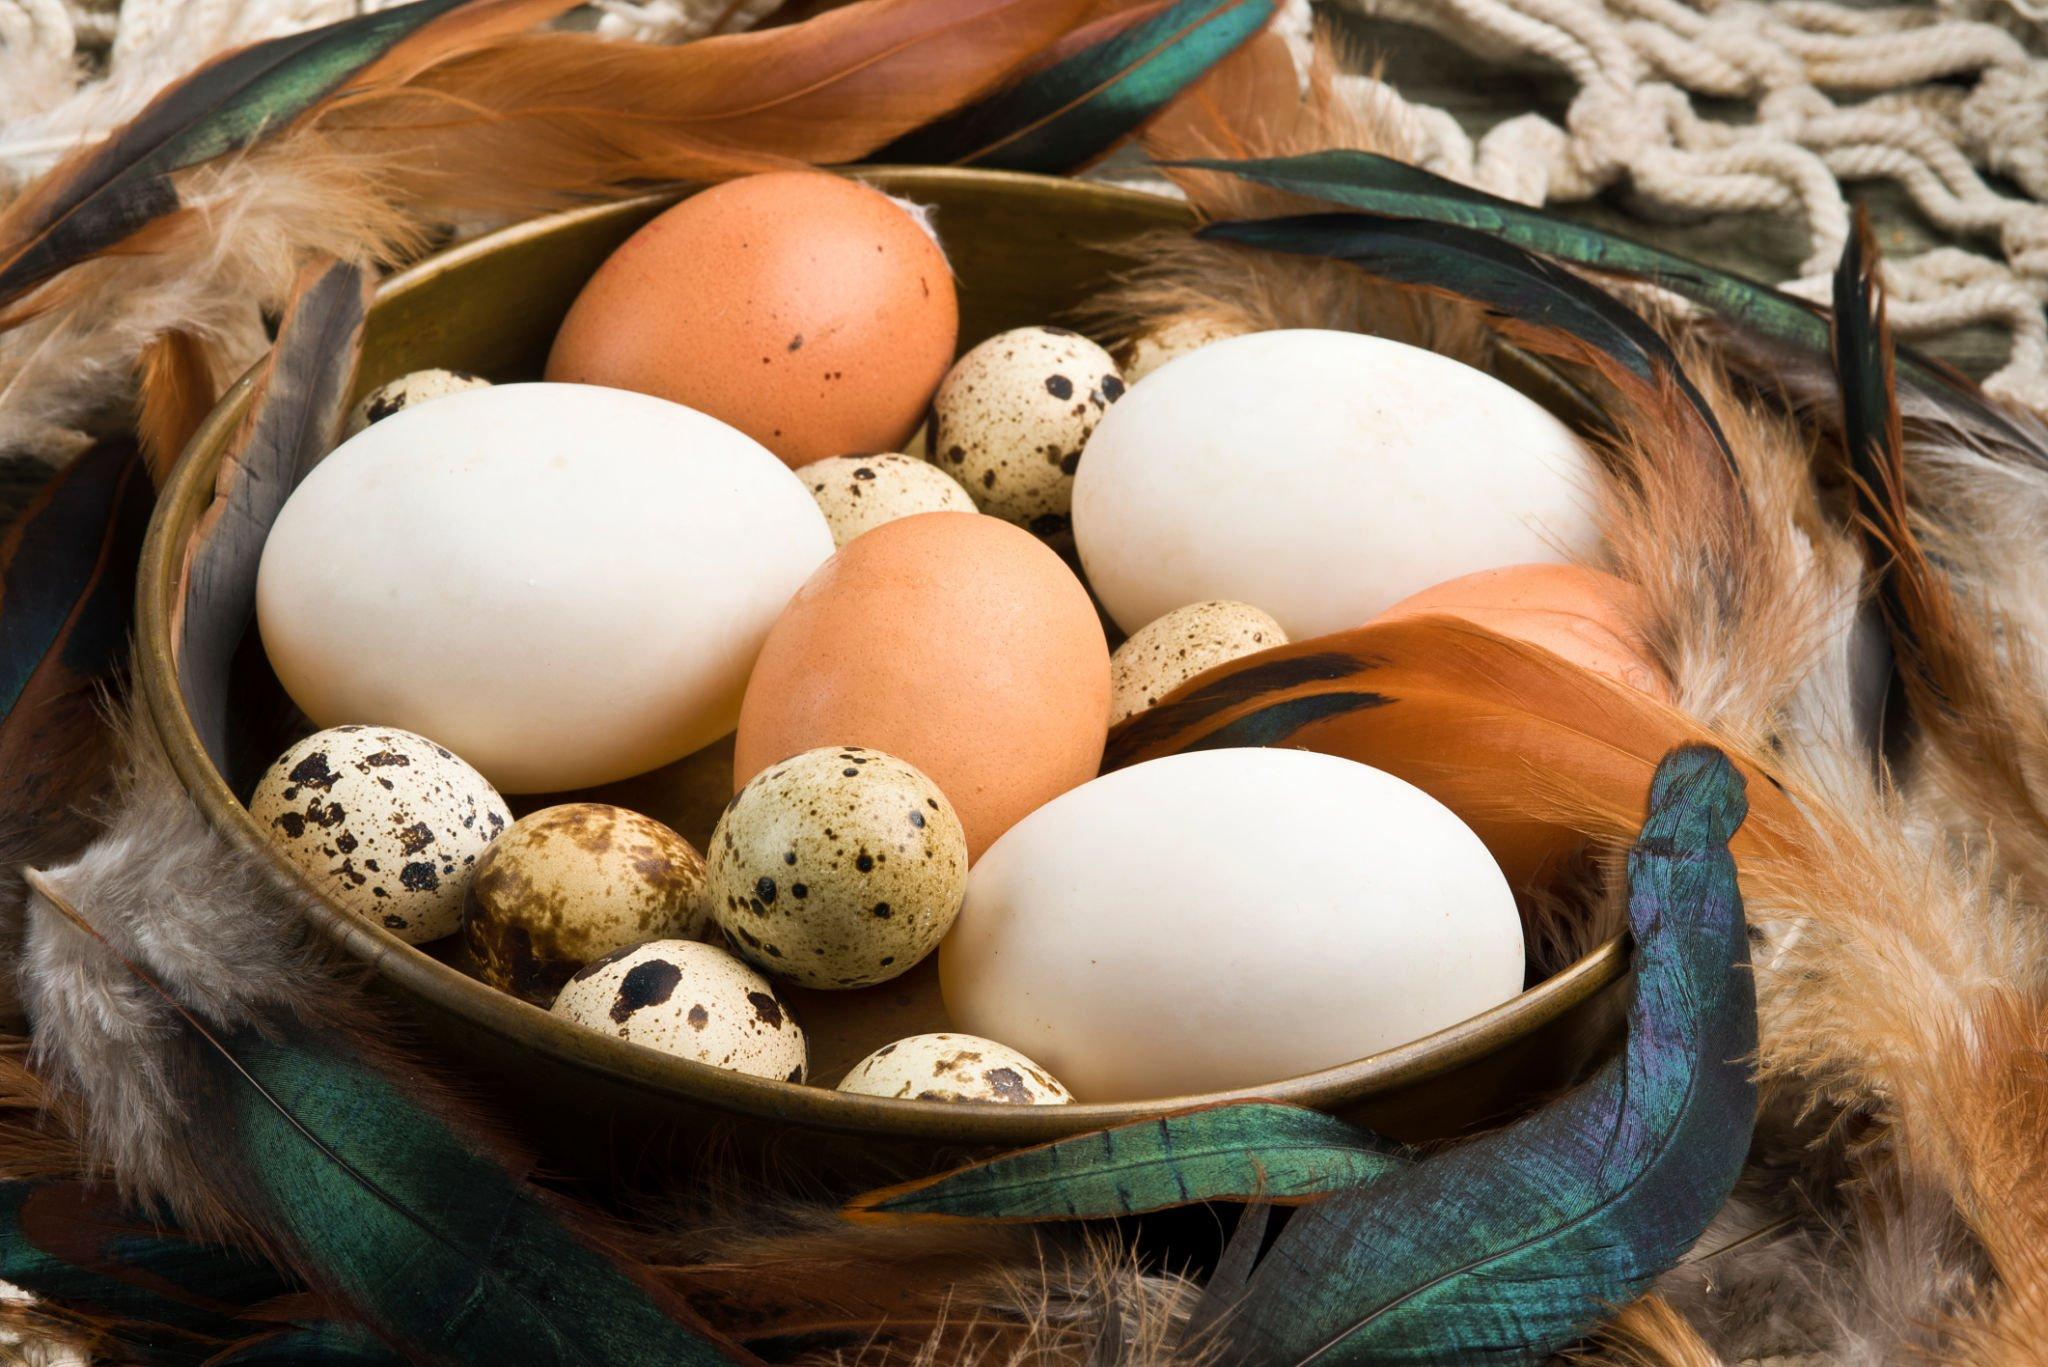 Perbandingan Telur Ayam, Telur Bebek dan Telur Puyuh, Bagus mana?